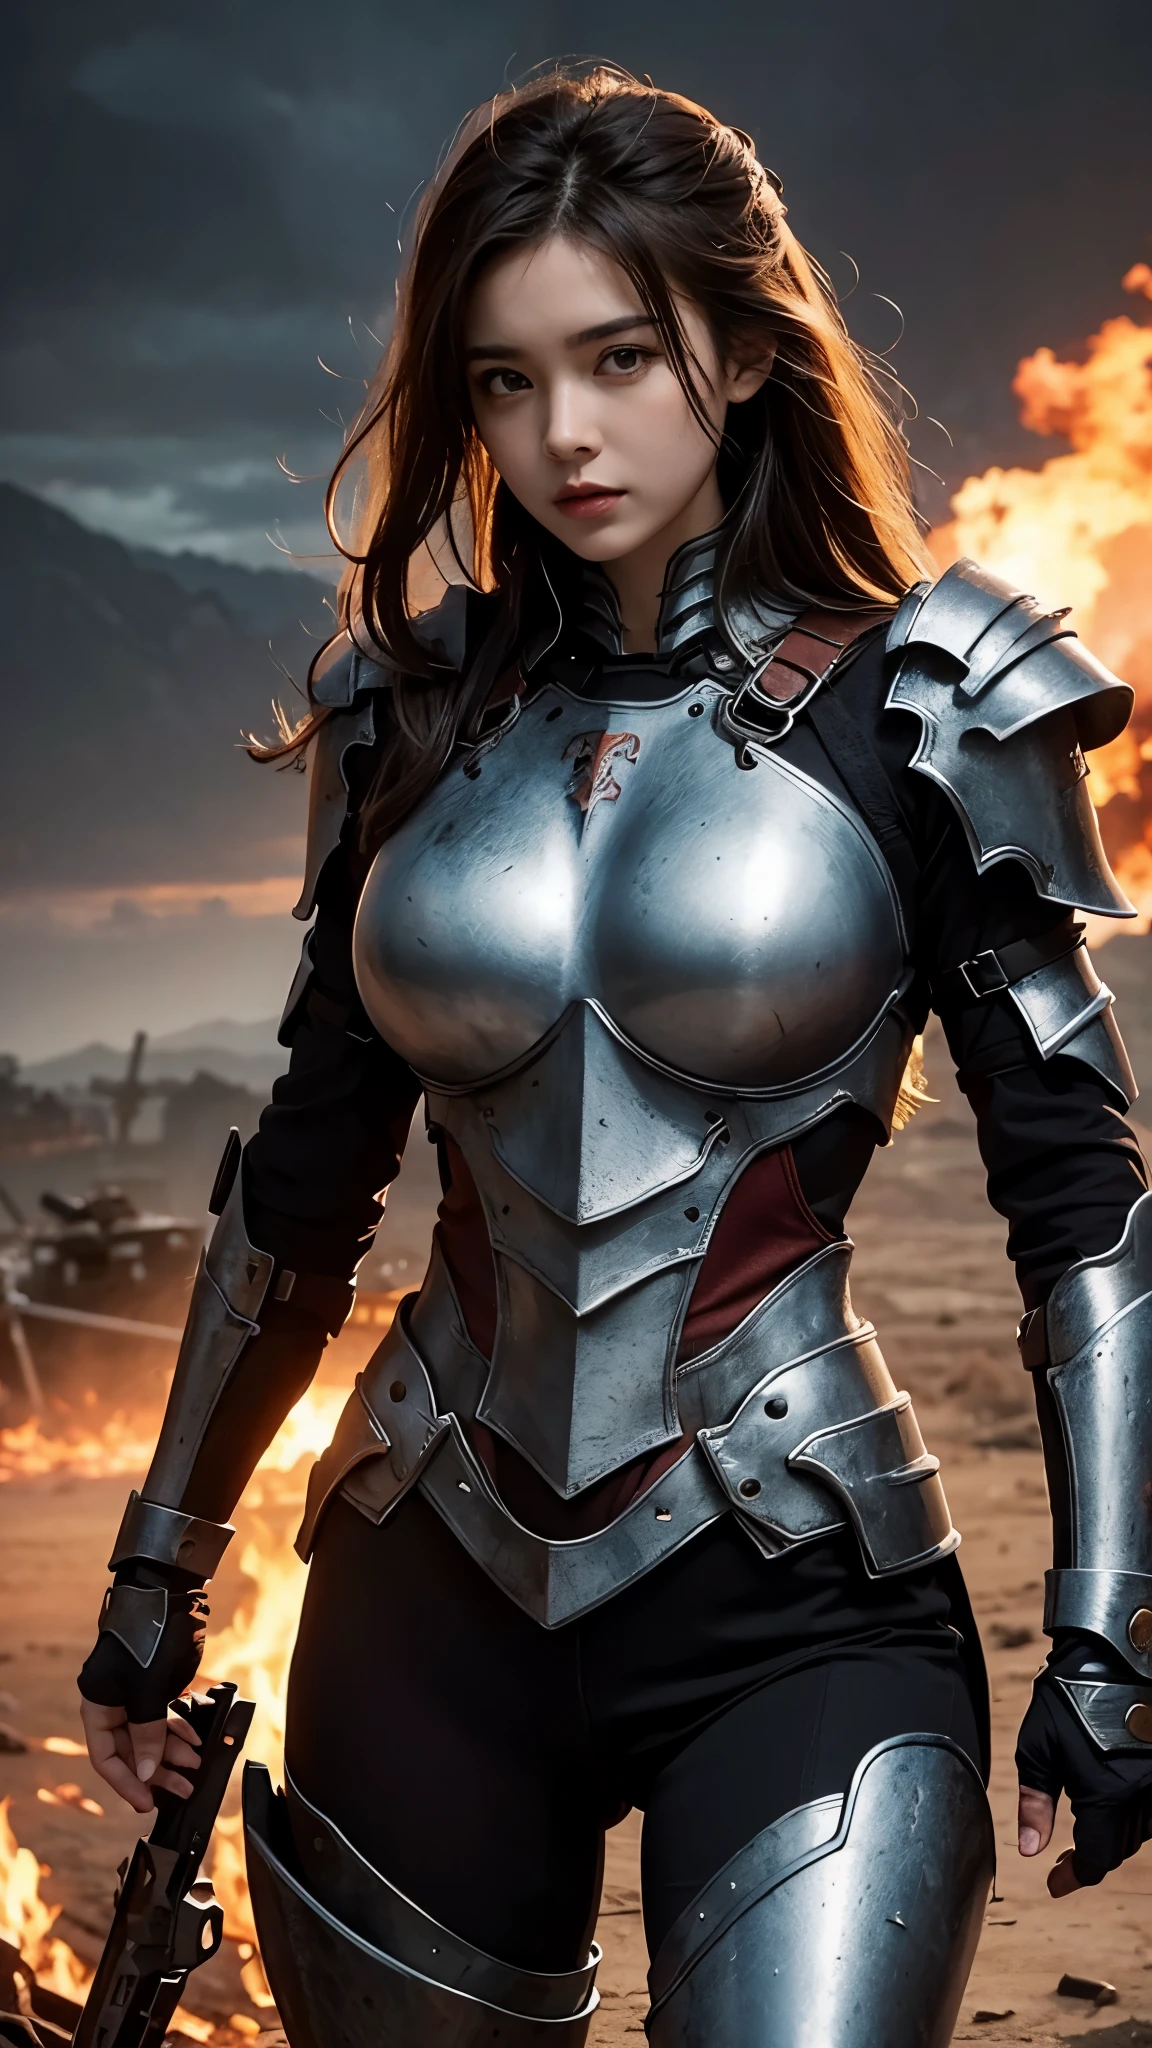 A woman wearing apocalypse armor